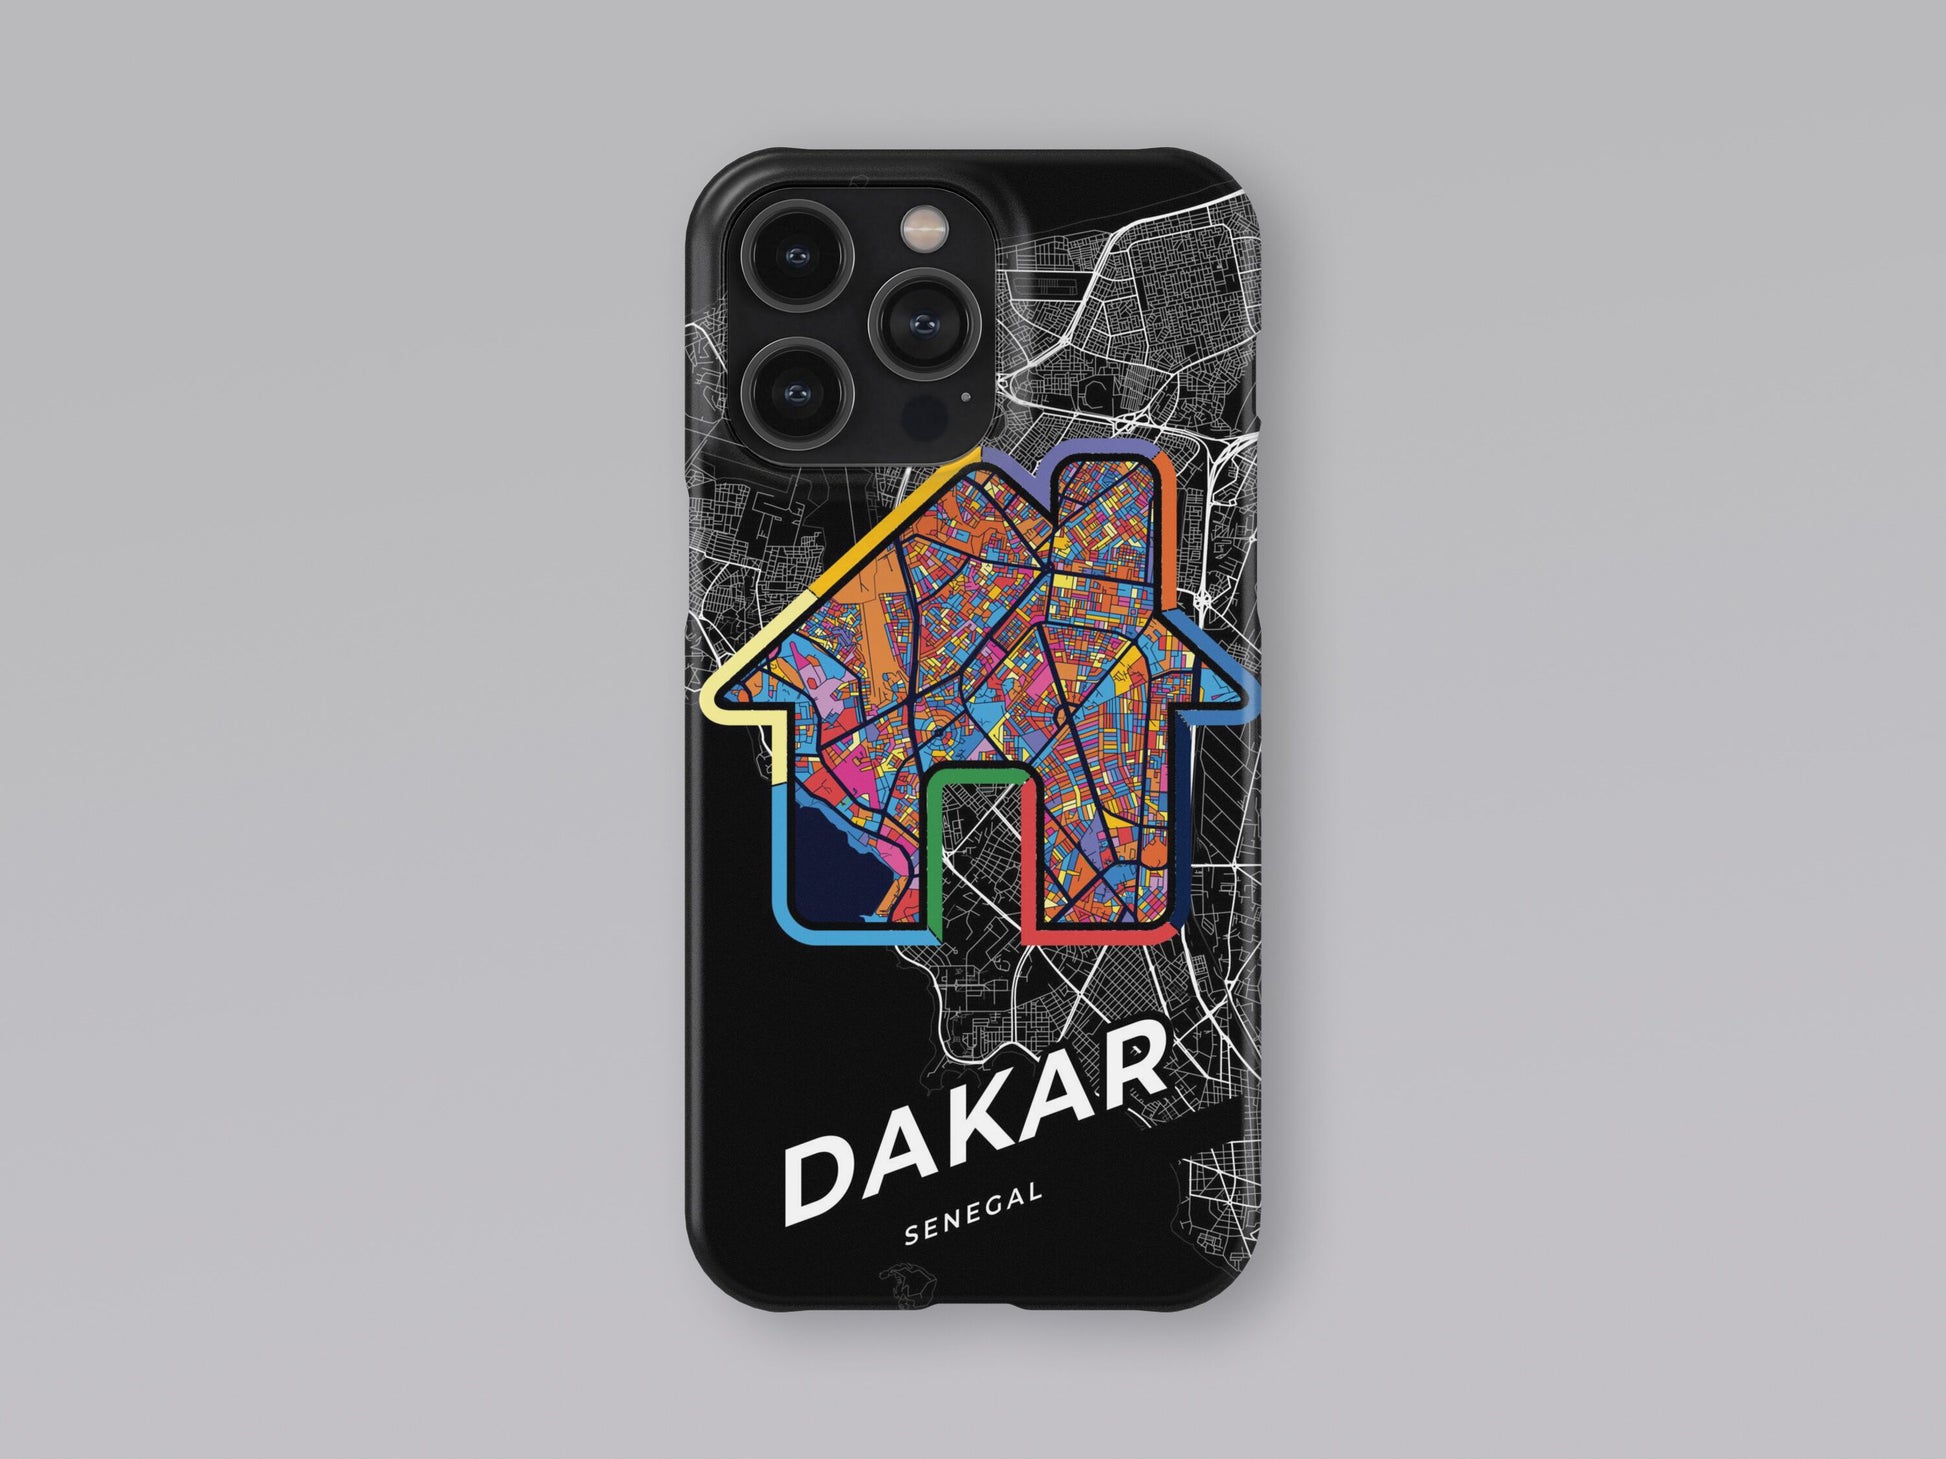 Dakar Senegal slim phone case with colorful icon. Birthday, wedding or housewarming gift. Couple match cases. 3